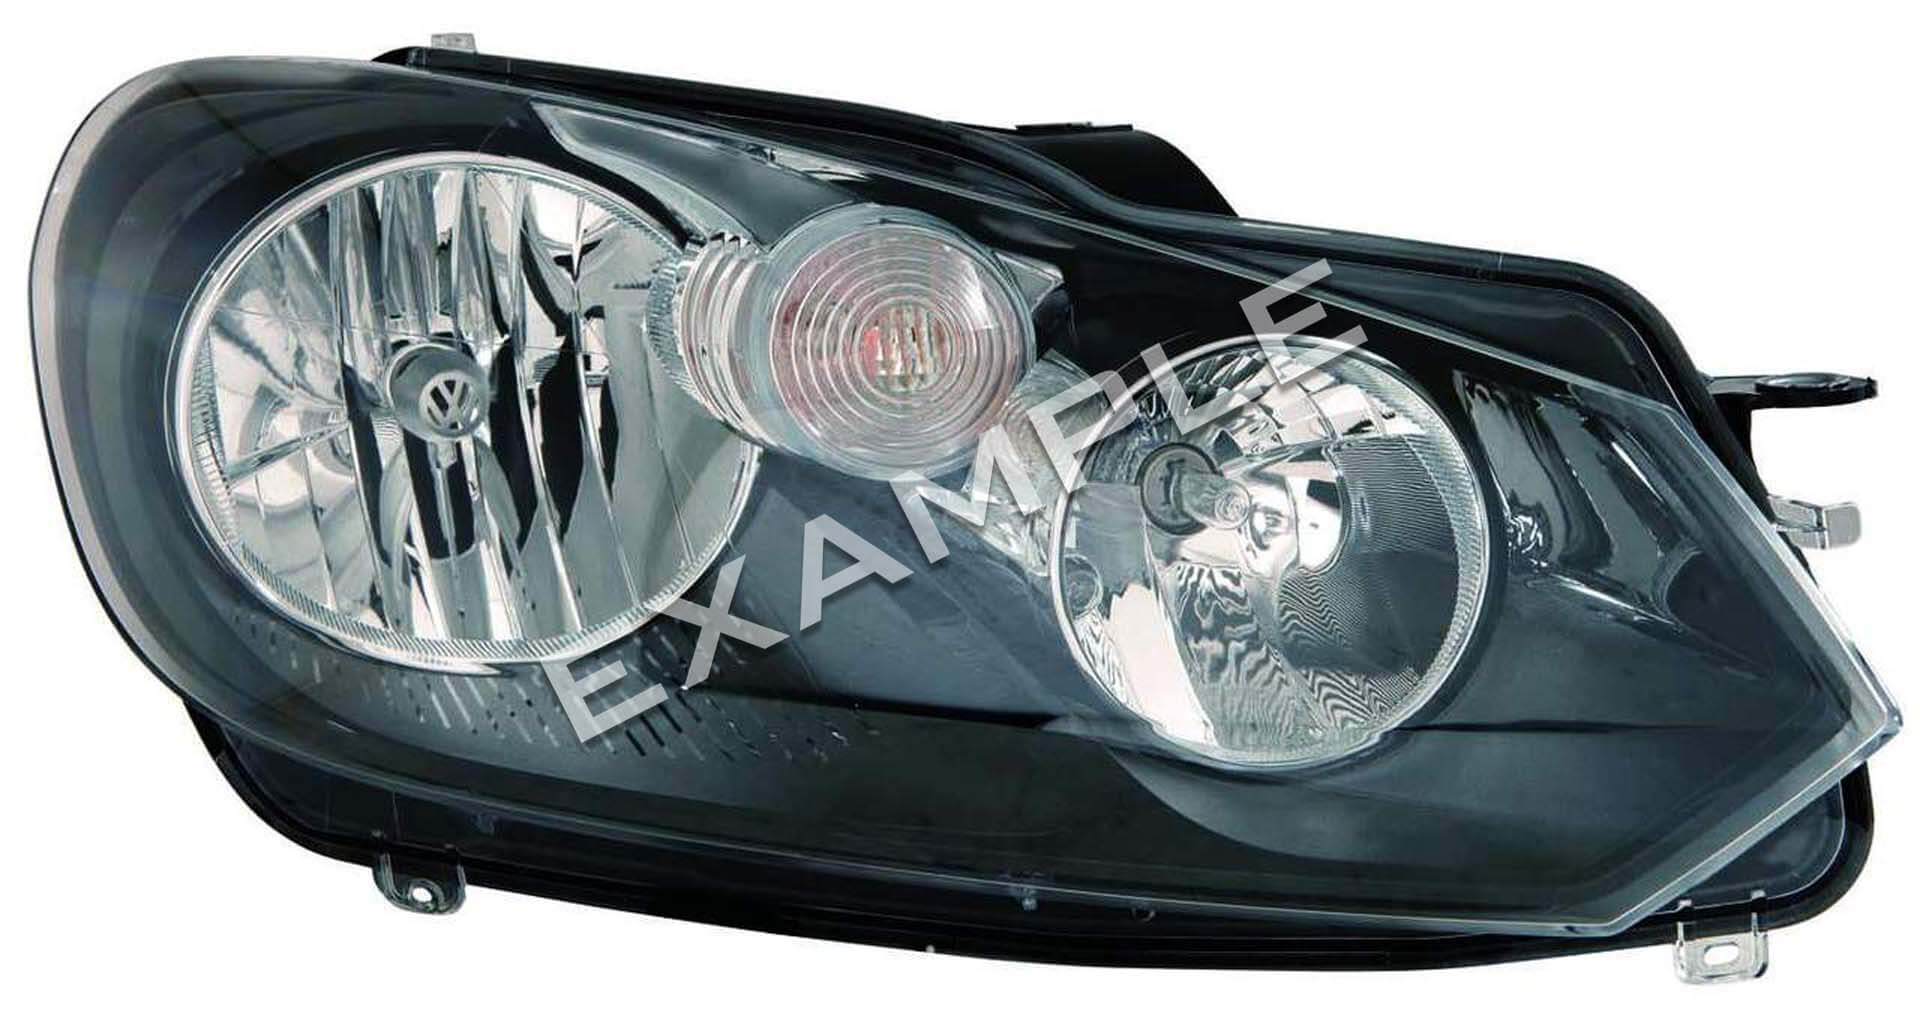 VW Golf MK VII 12-17 Bi-LED licht upgrade retrofit kit voor halogeen koplampen